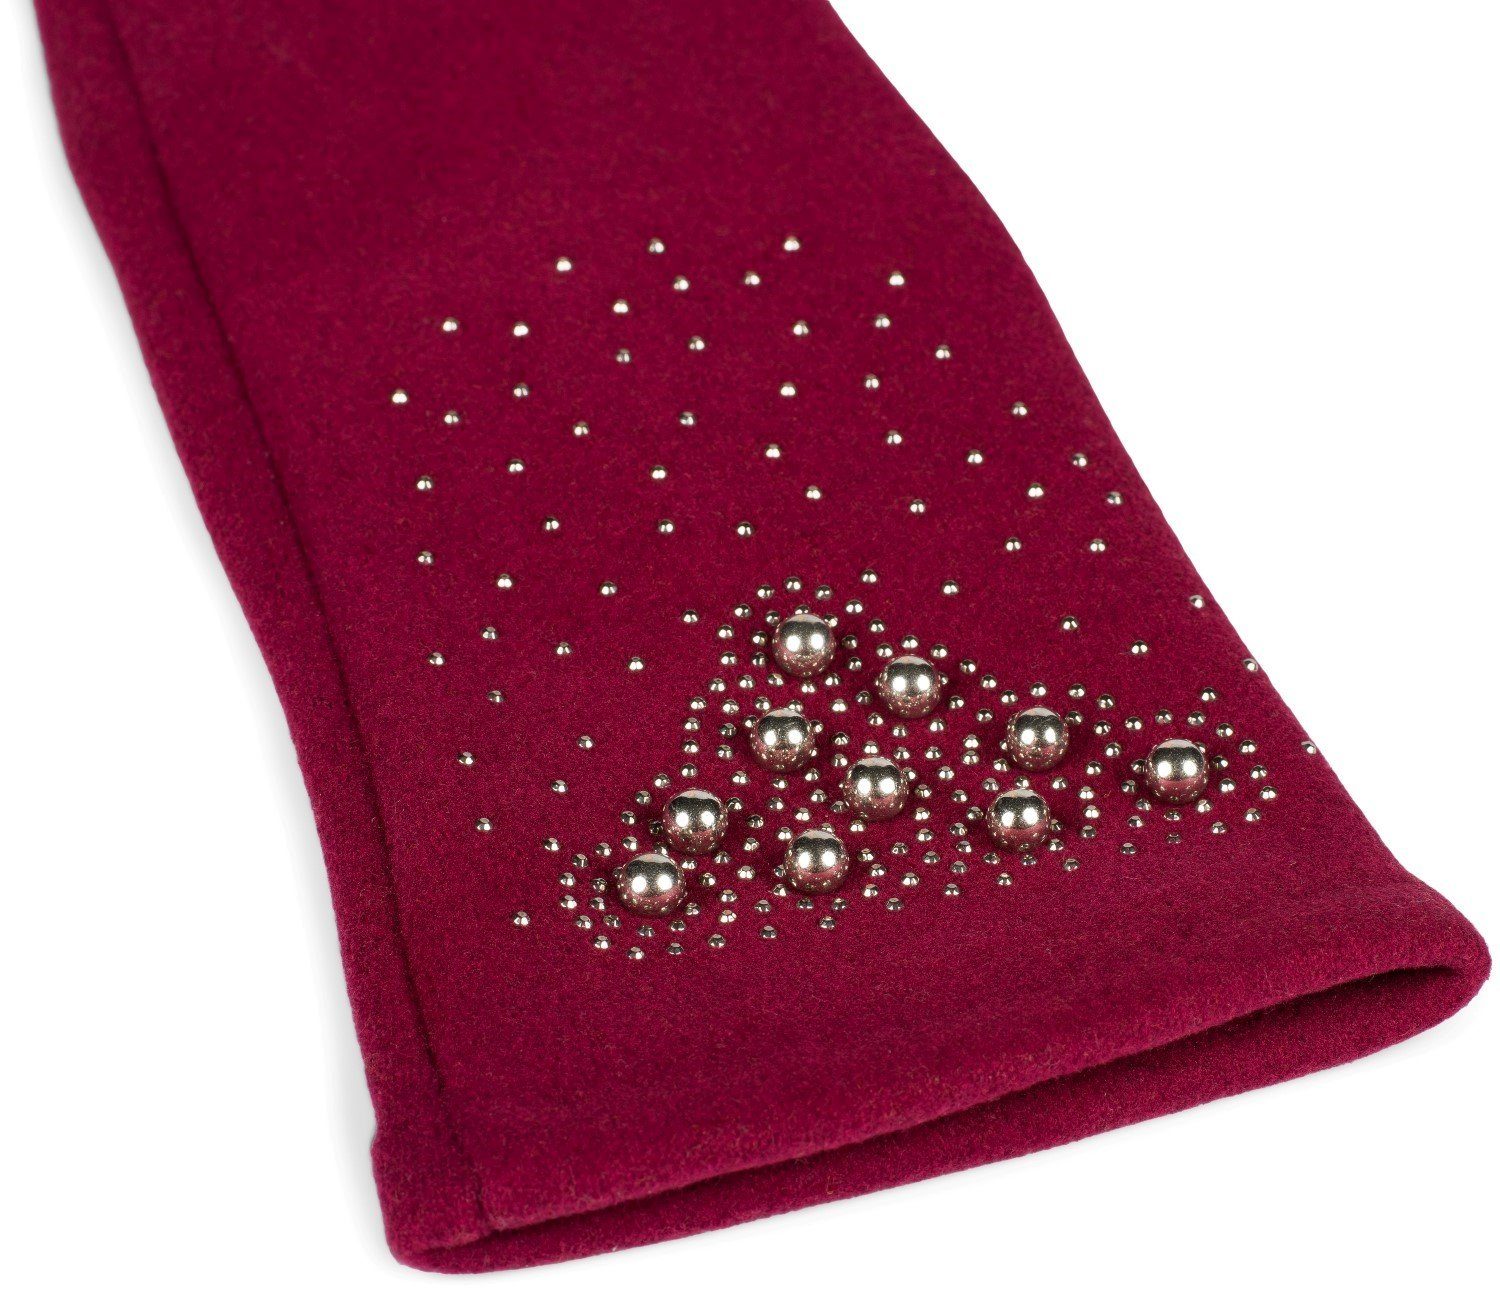 styleBREAKER Fleecehandschuhe mit Bordeaux-Rot und Strass Perlen Touchscreen Handschuhe